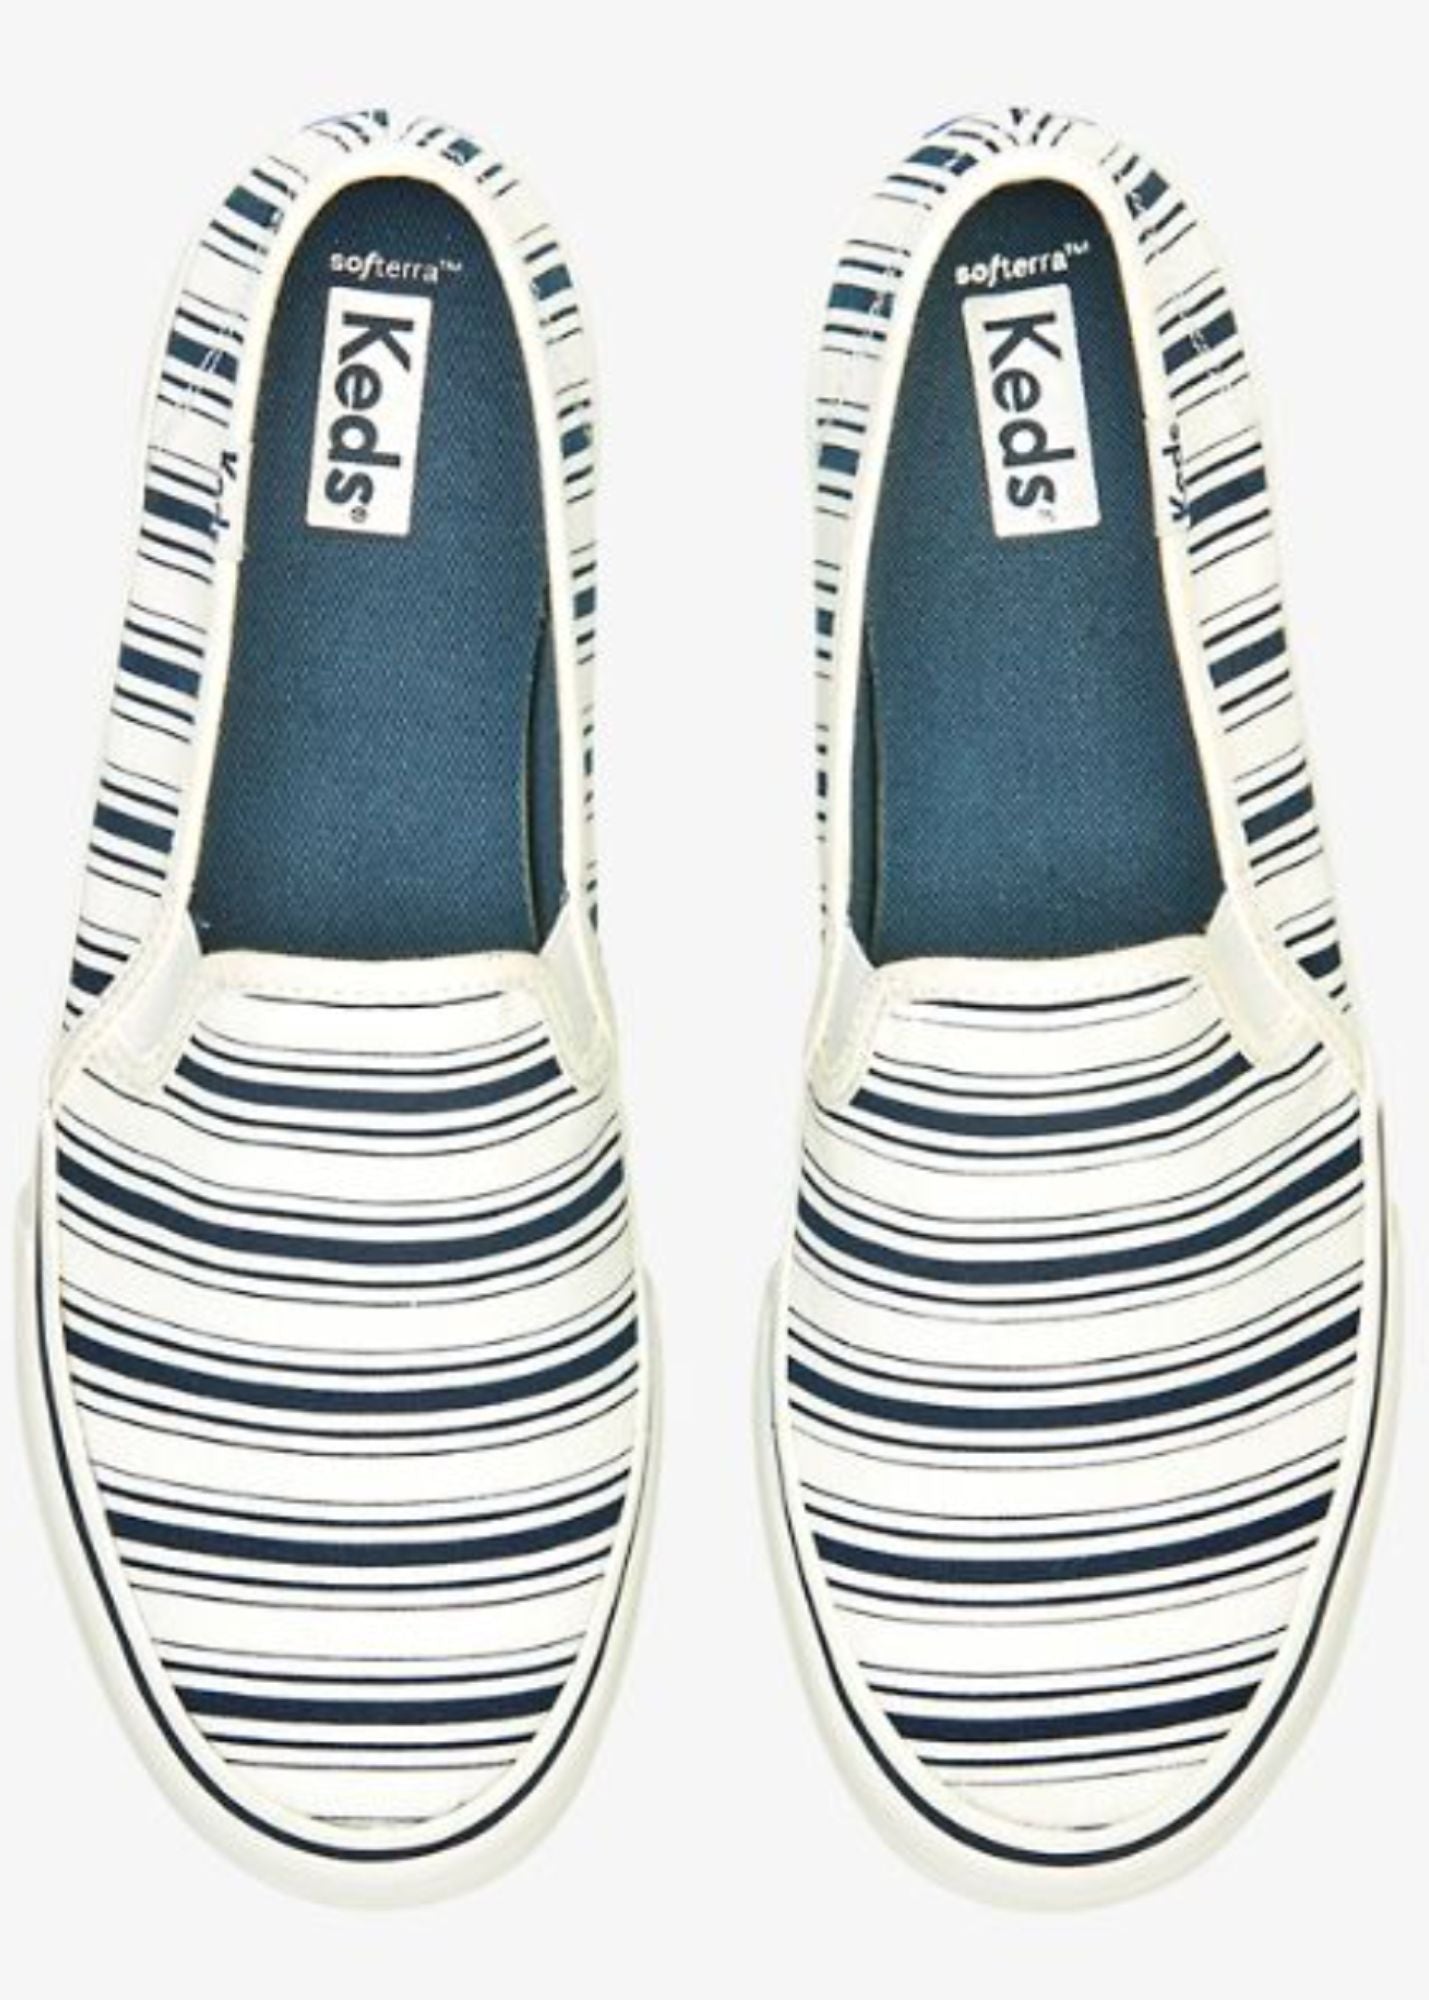 Keds® Double Decker Navy Stripe Canvas Sneakers Shoes